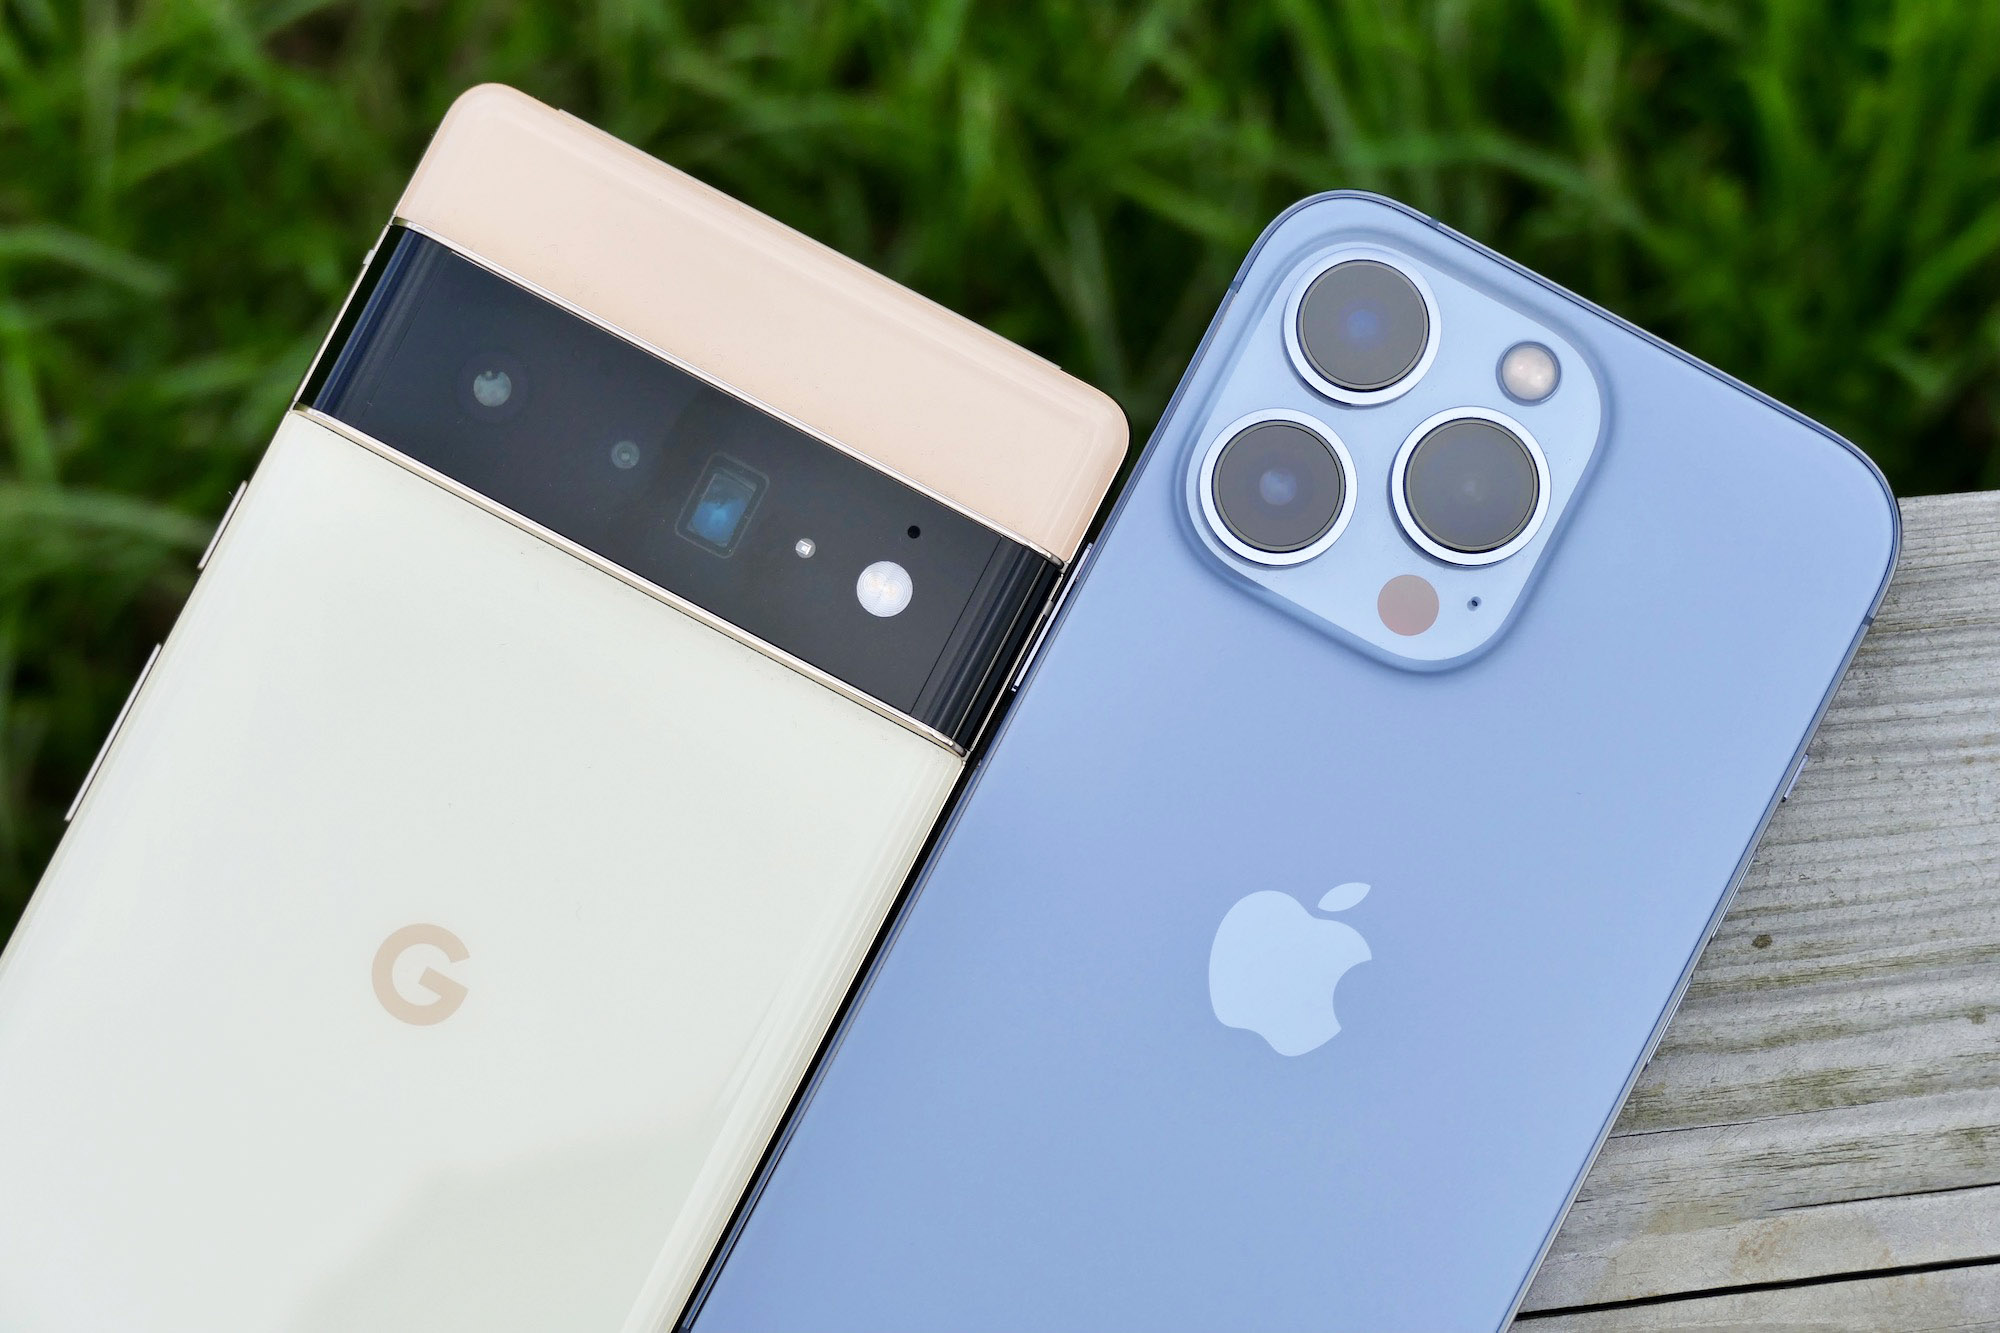 Google Pixel 6 Pro vs Apple iPhone 13 Pro: Which Pro phone should